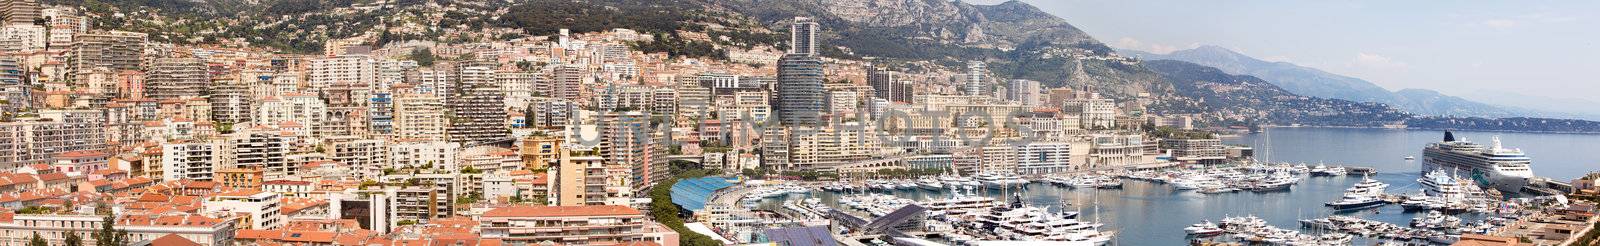 A high resolution panorama of Monaco, Monte Carlo